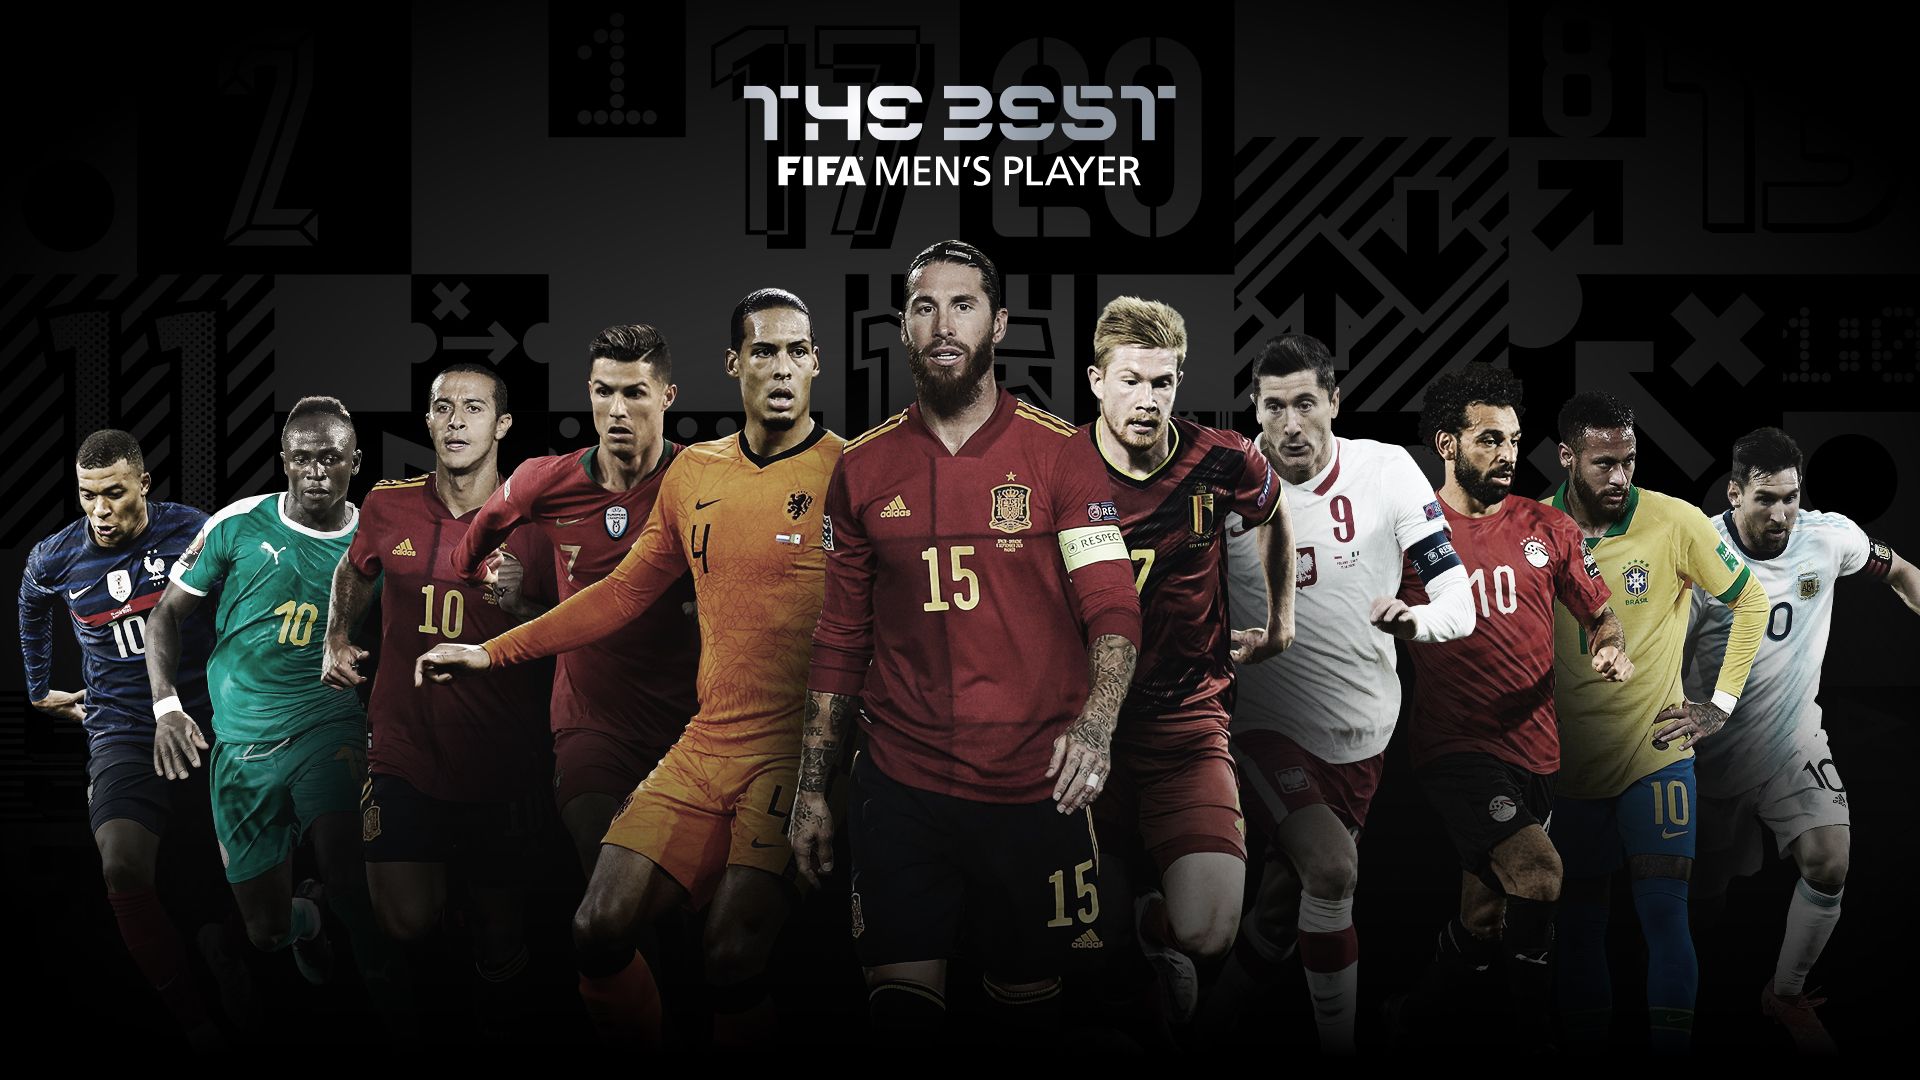 The Best fifa football awards